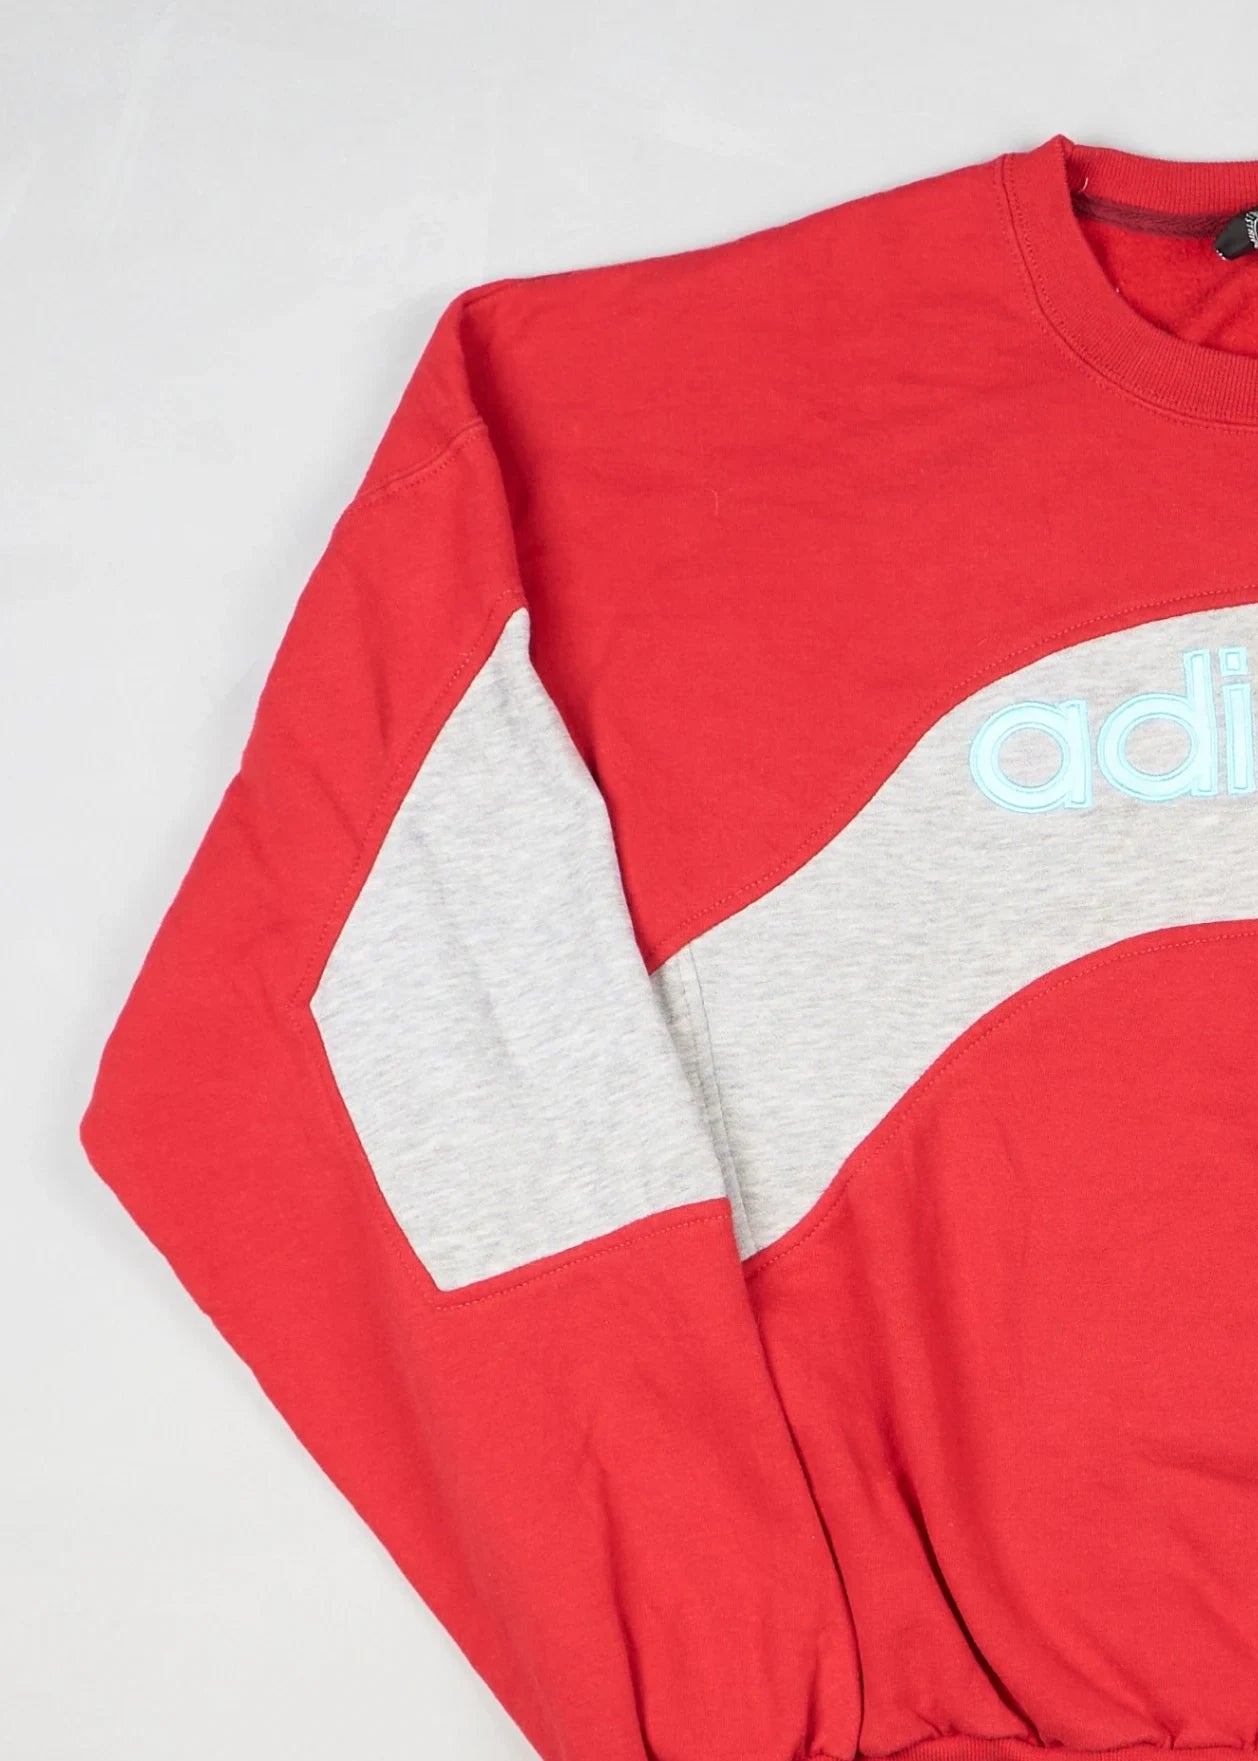 Adidas - Sweatshirt (XL) Left